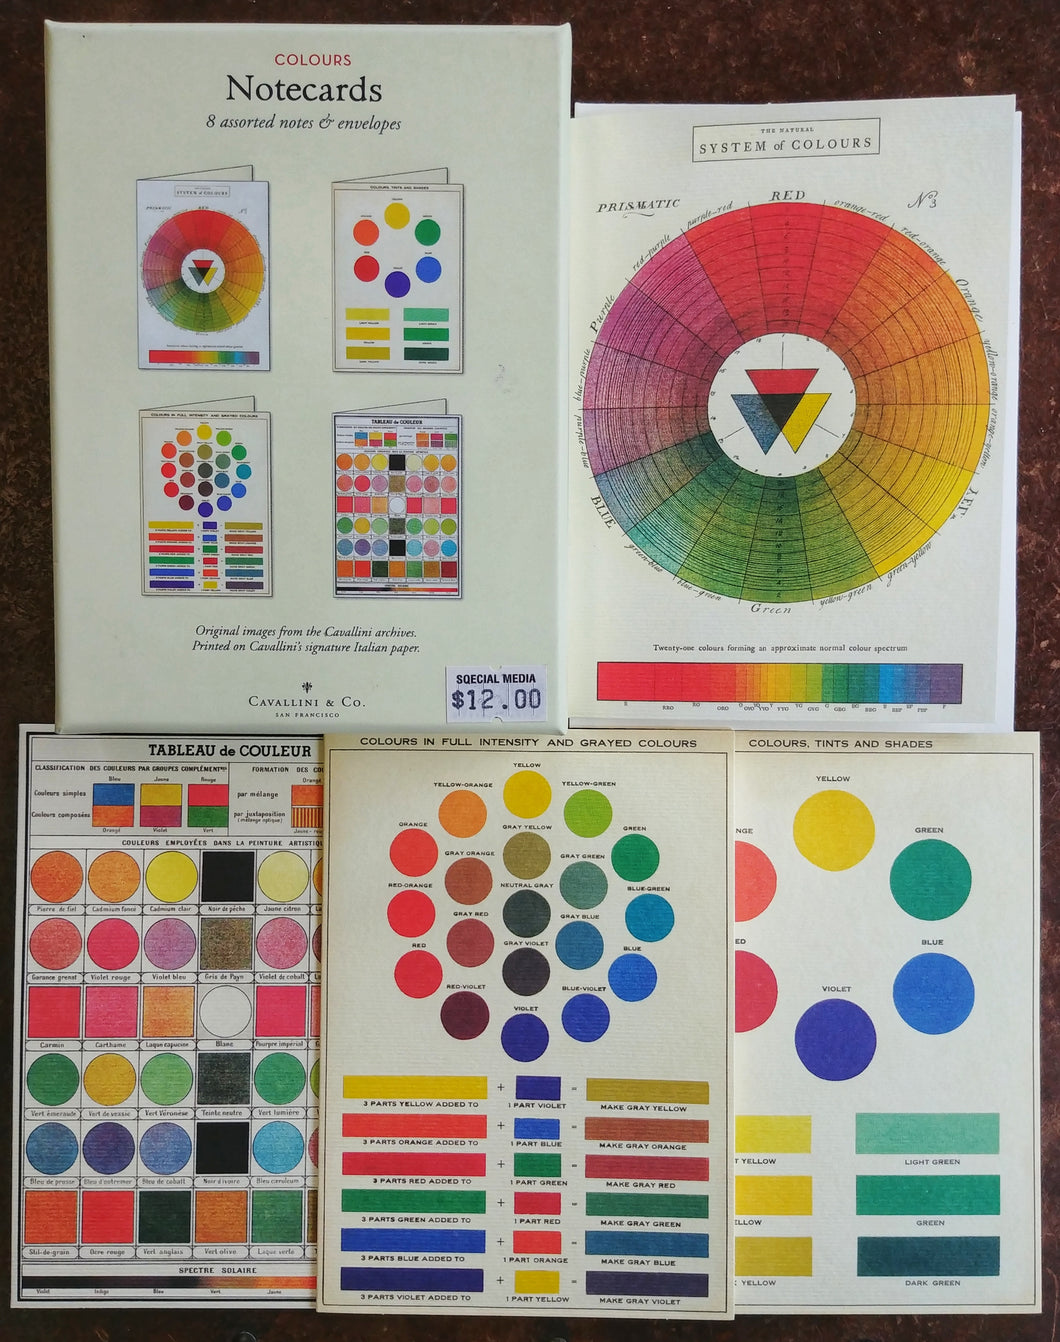 Colours vintage illustration boxed notecards (Cavallini)